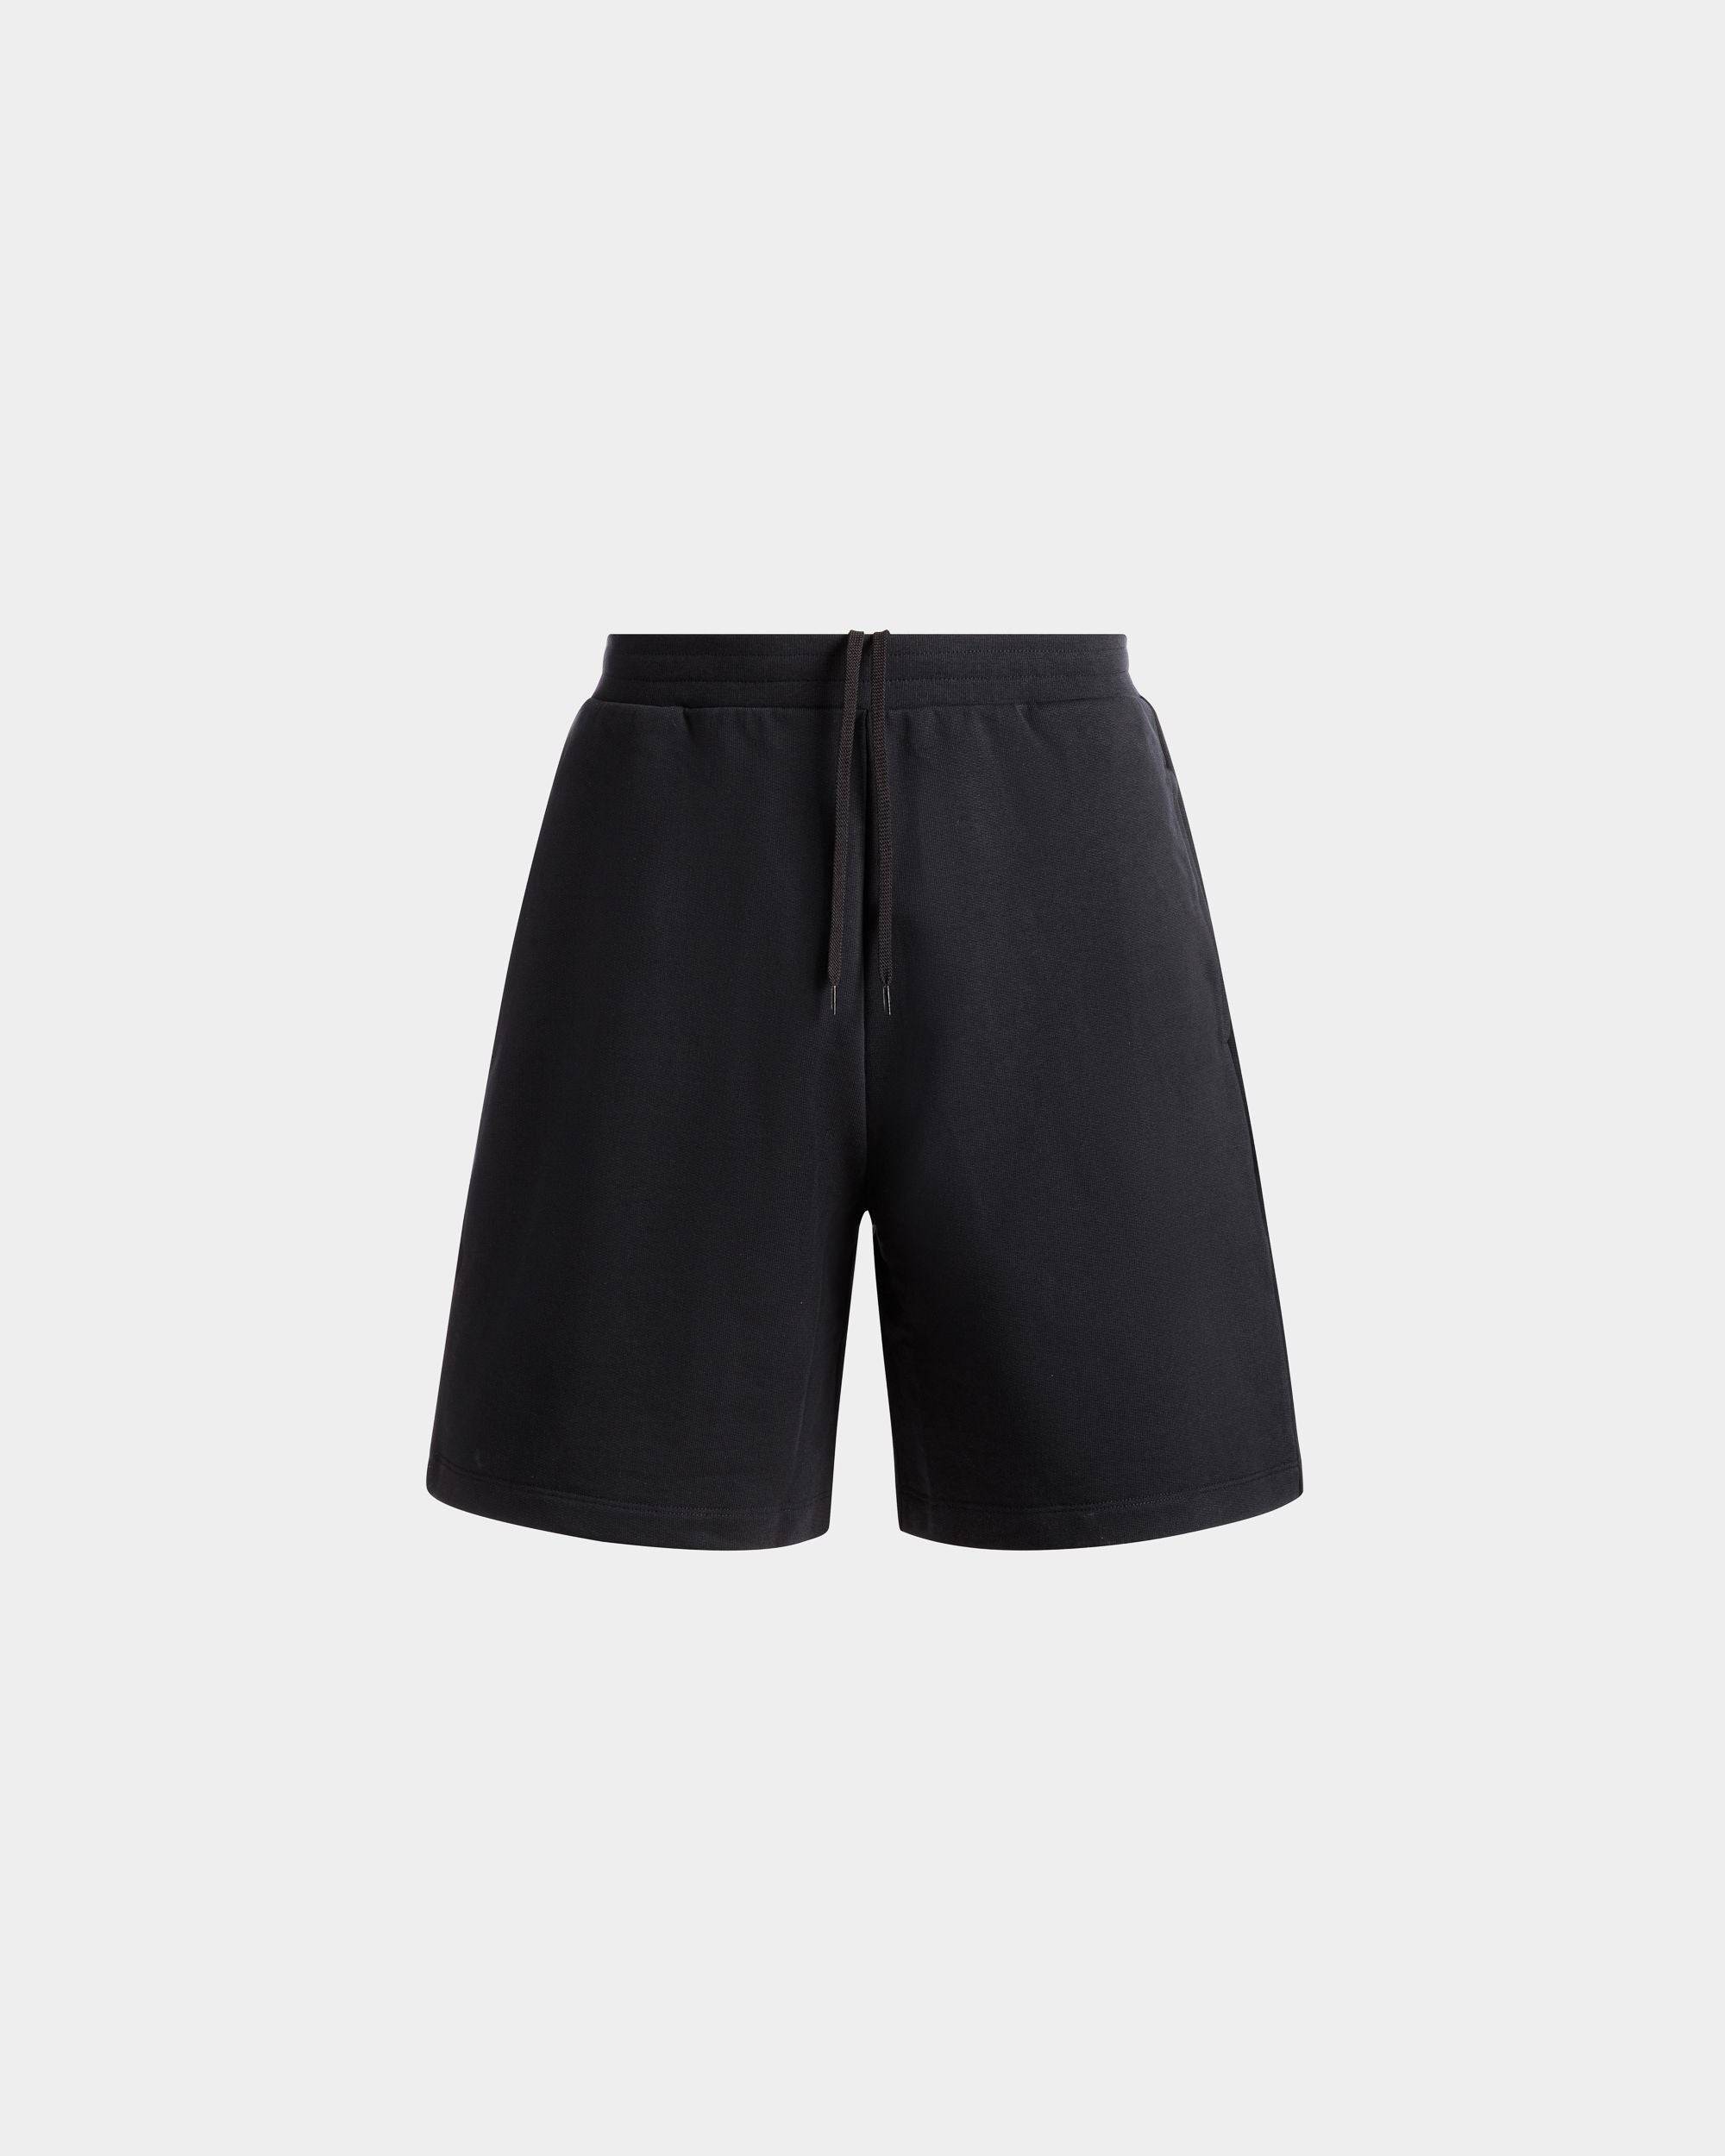 Men's Sweat shorts in Navy Blue Cotton | Bally | Still Life Front